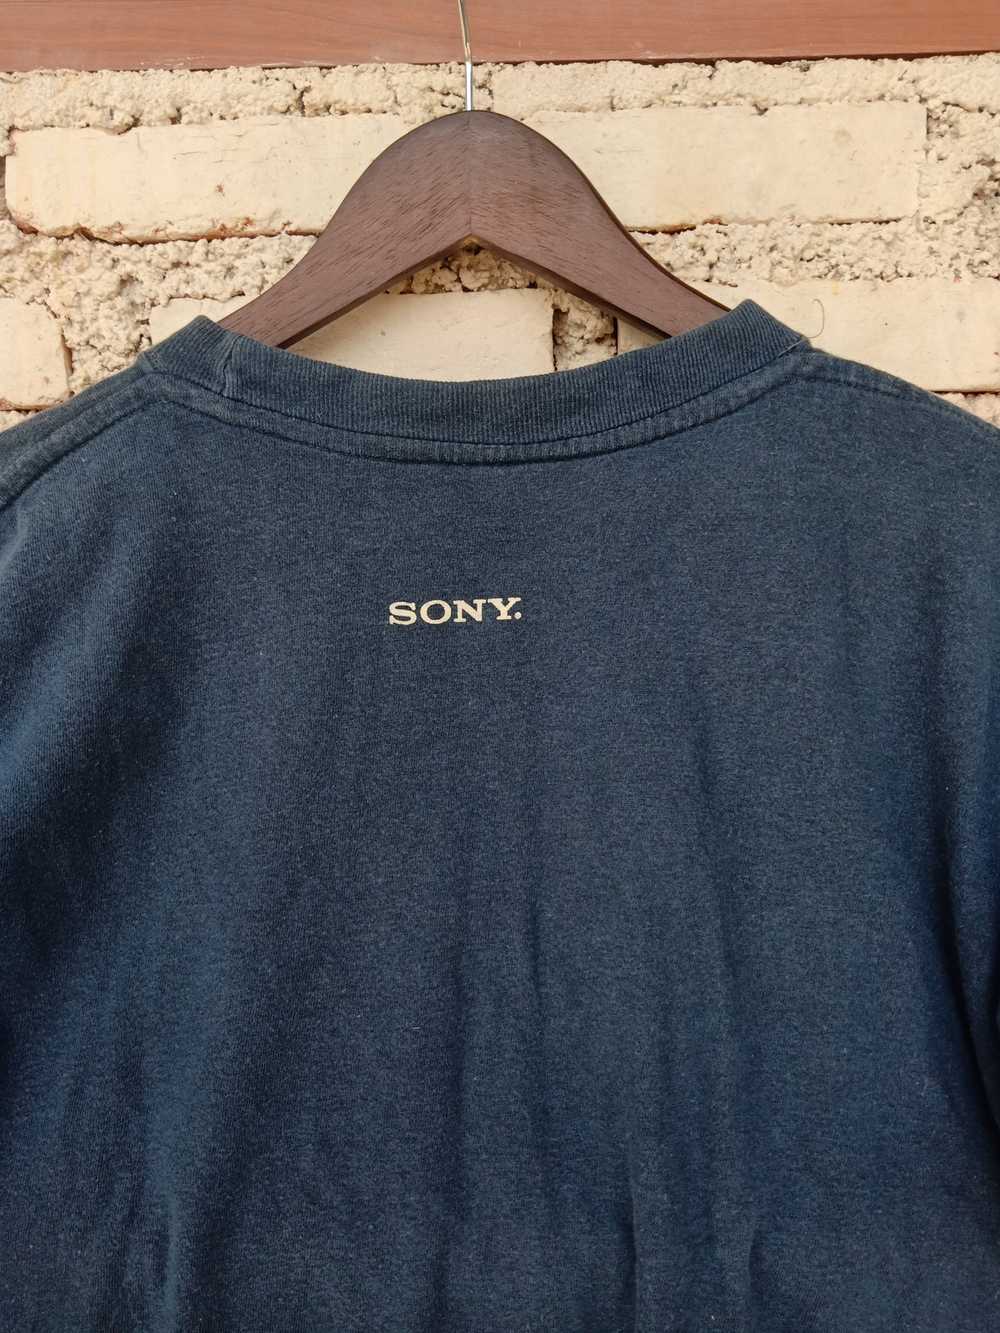 Sony × Vintage Vintage SONY Walkman promo t-shirt - image 3